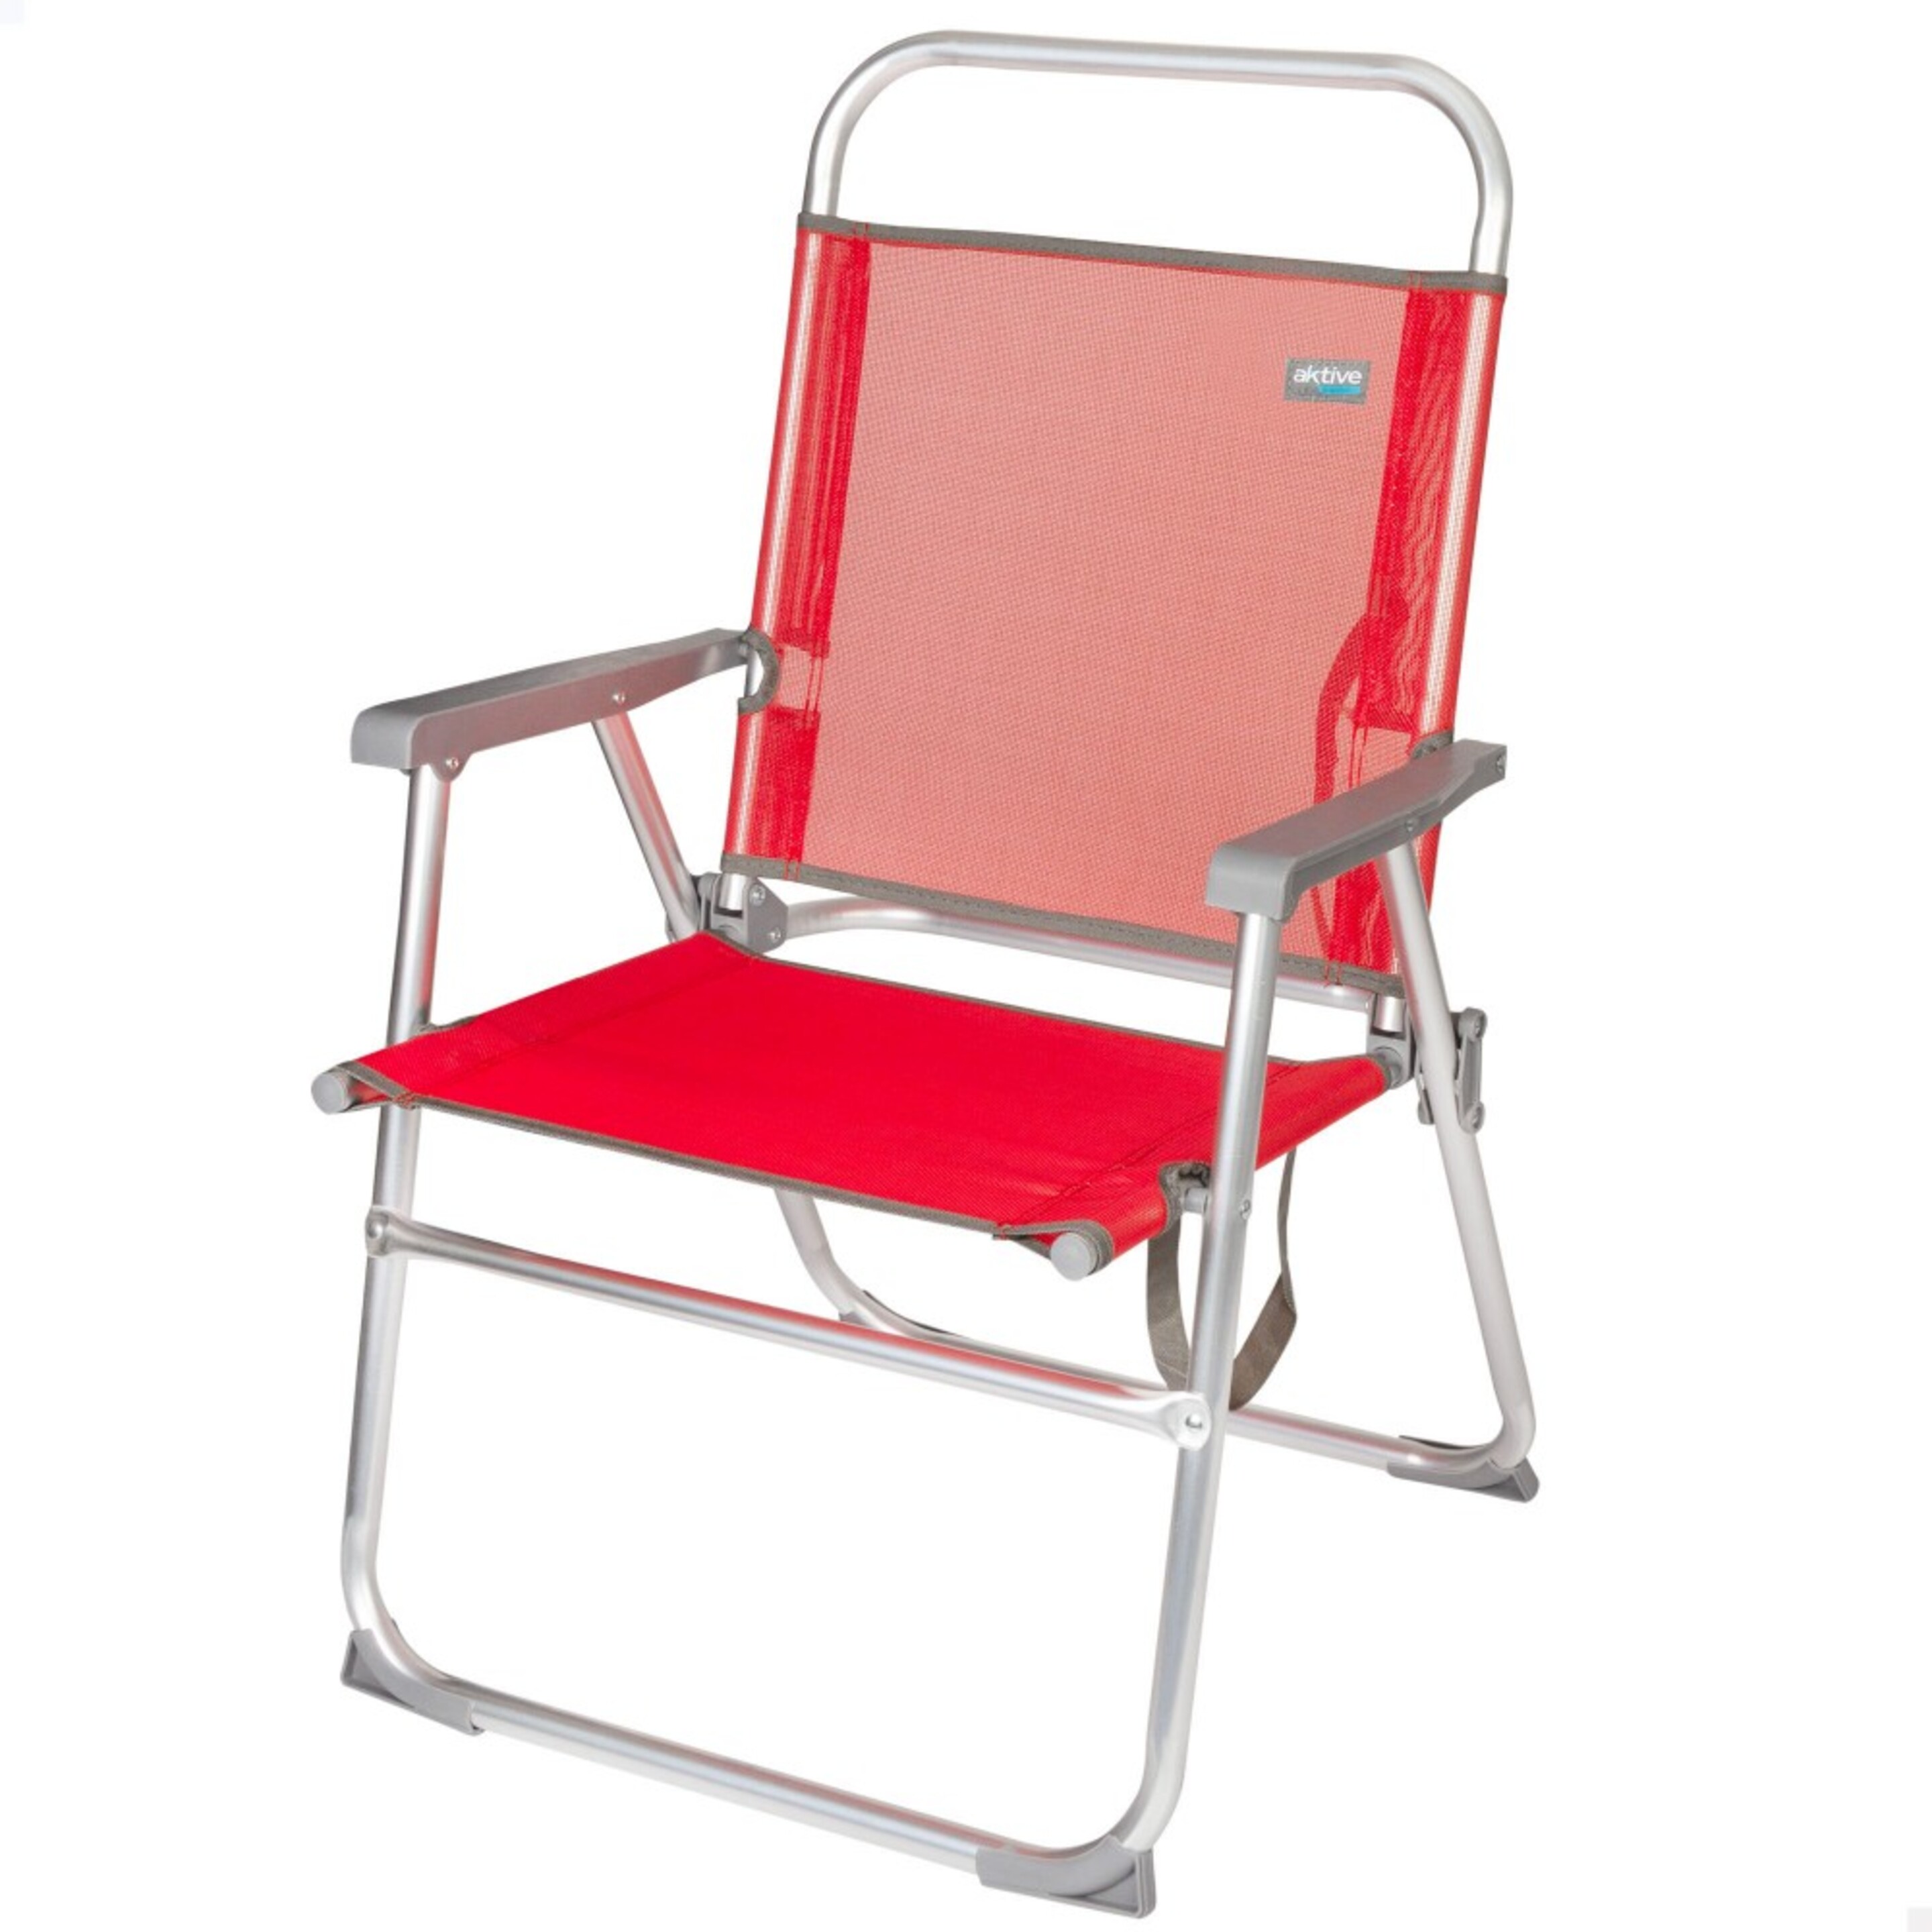 Cadeira Dobrável Fixa Alumínio Aktive Beach  - Vermelho